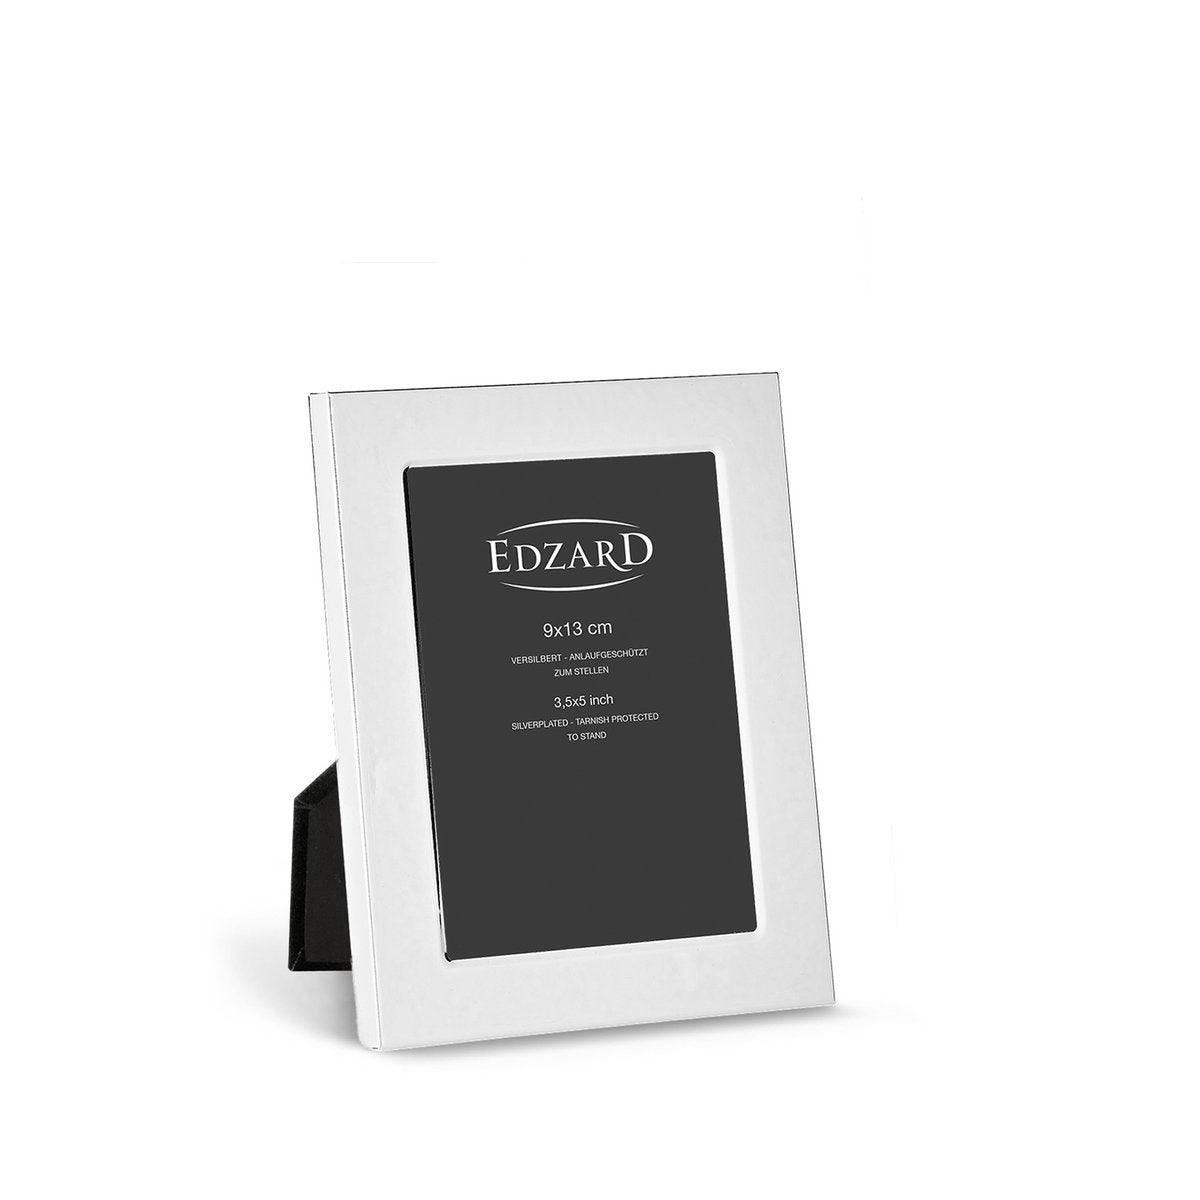 EDZARD Fotorahmen Bilderrahmen Altamura für Foto 9x13 cm, edel versilbert, anlaufgeschützt - HomeDesign Knaus